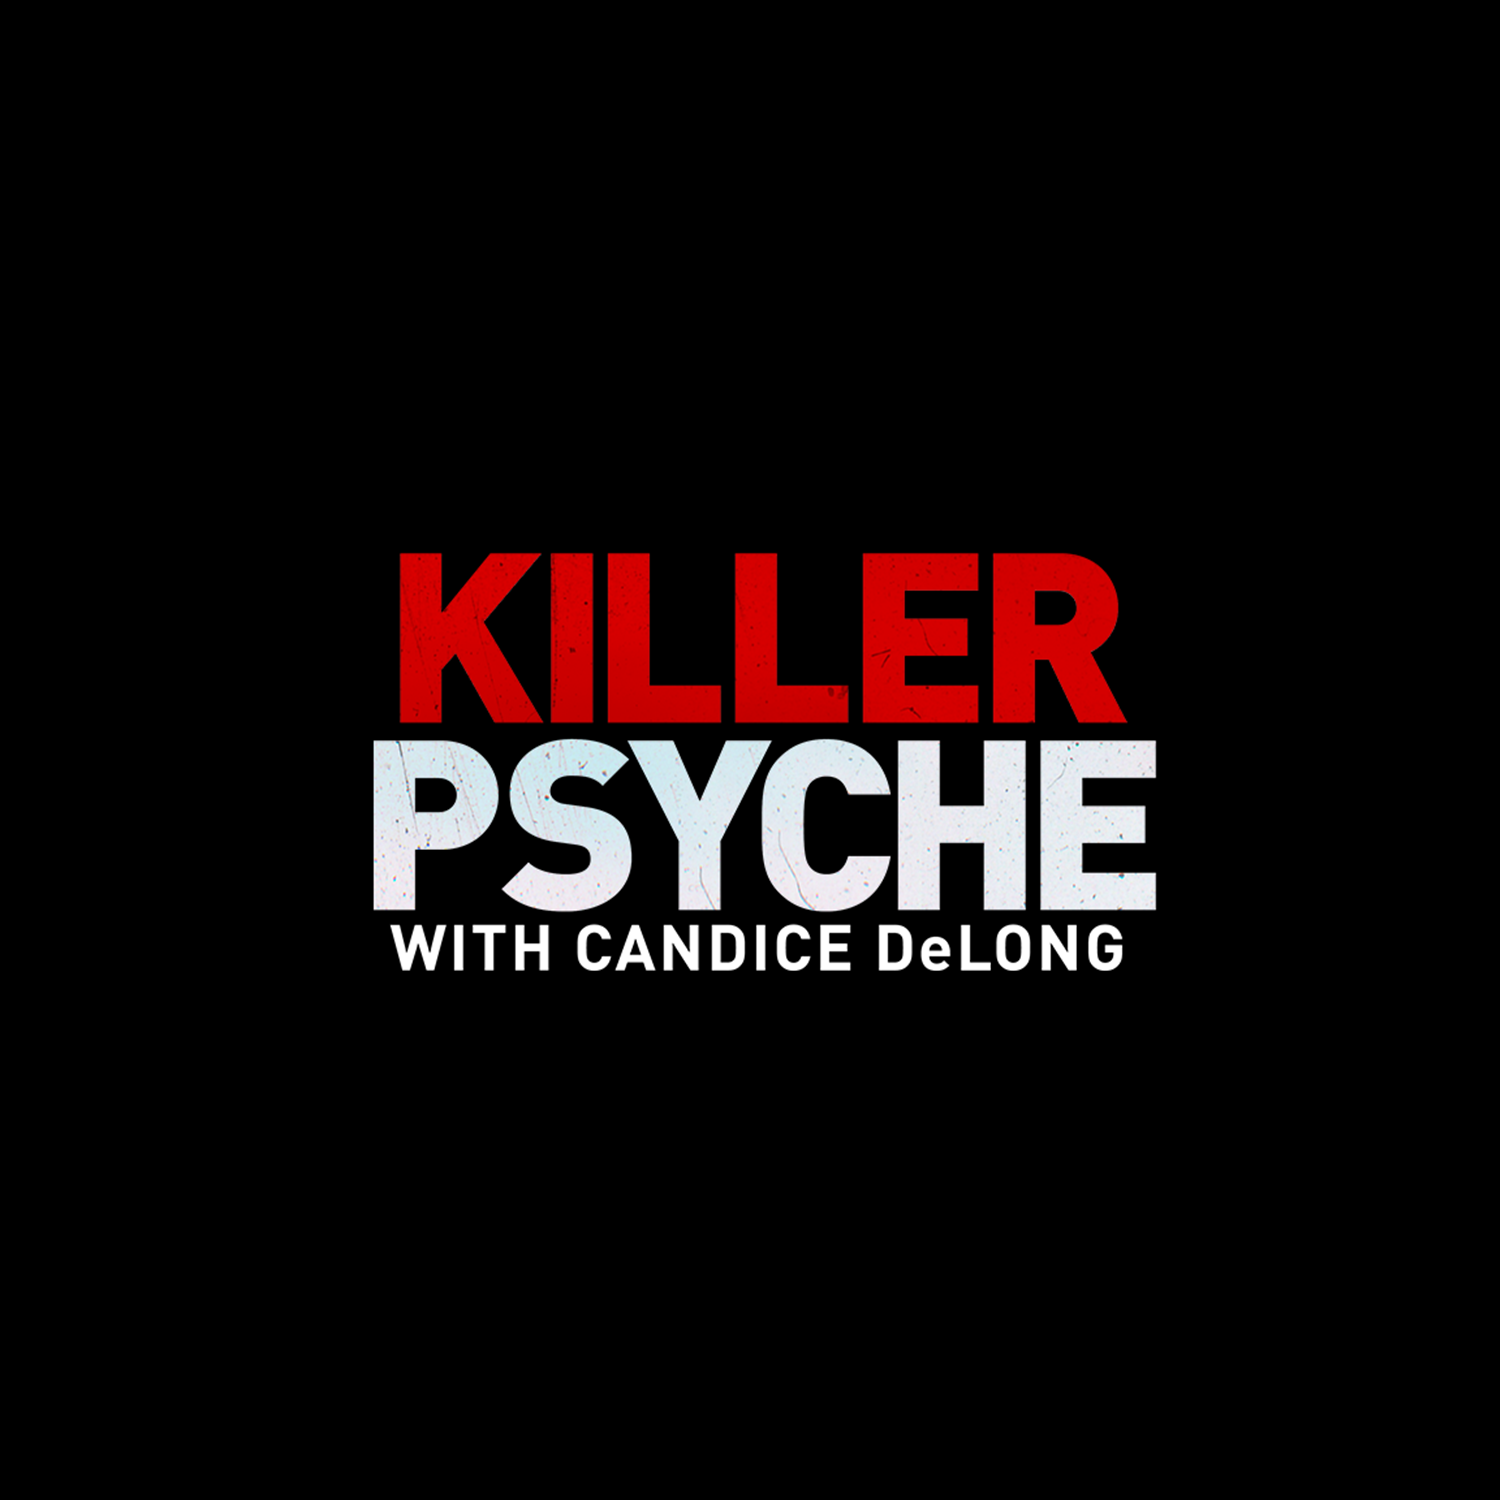 Killer Psyche Logo Black Mug